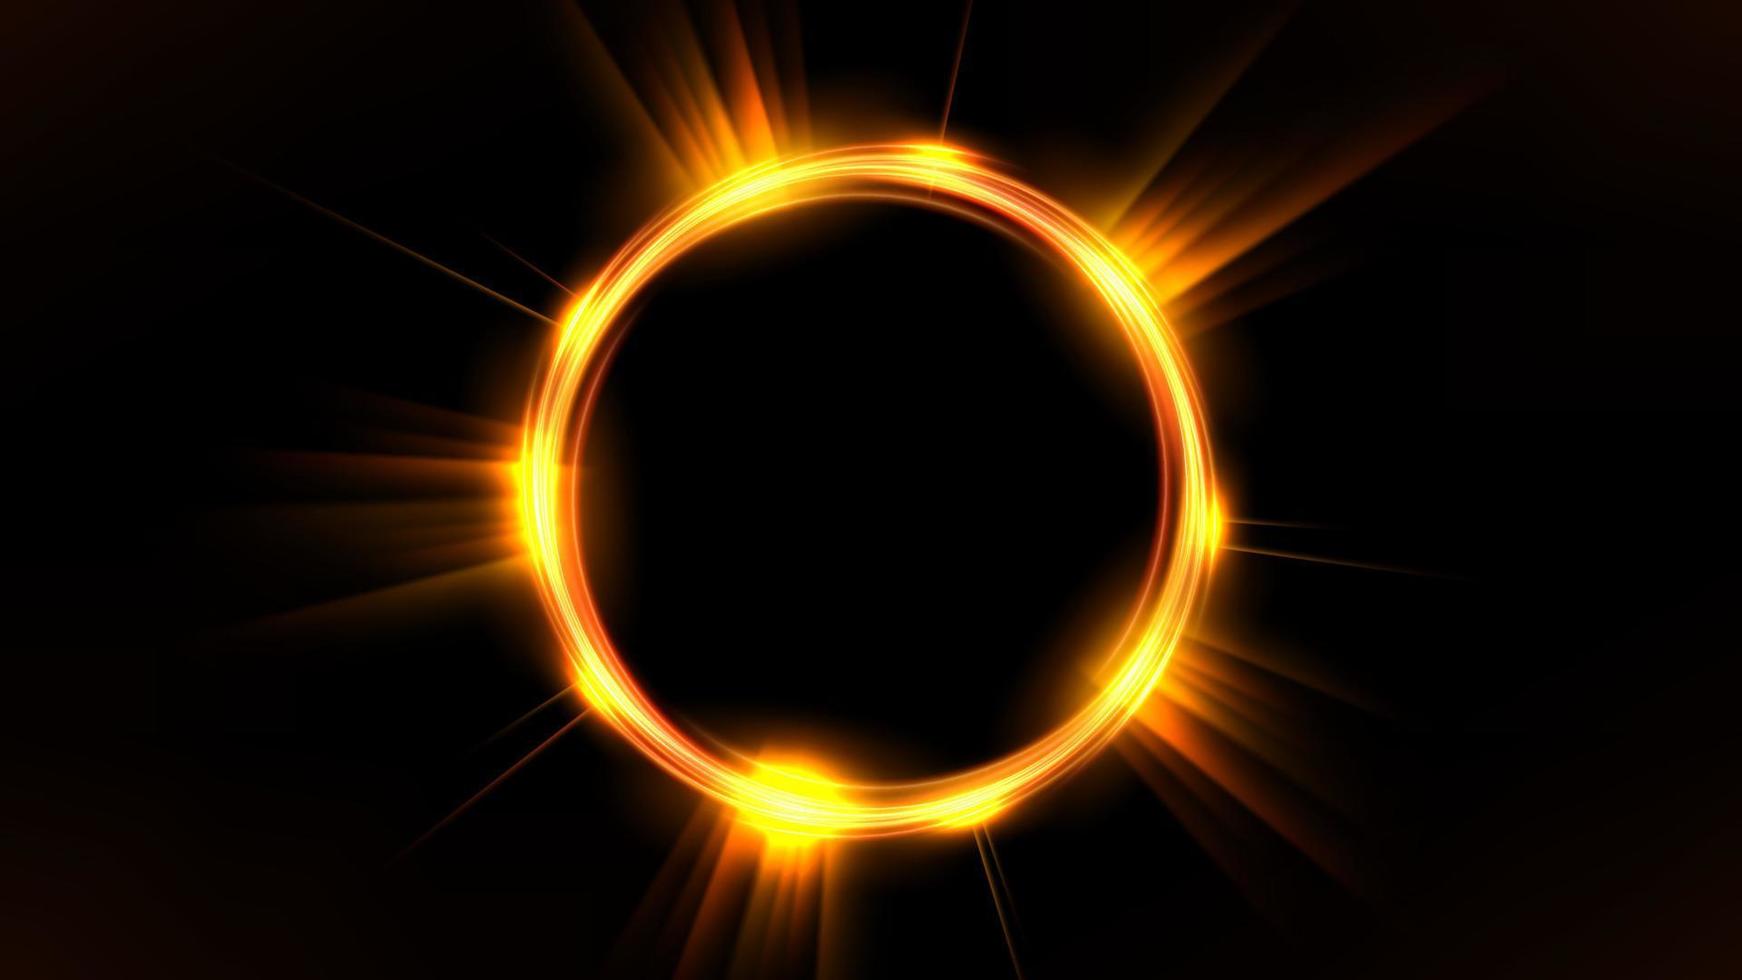 círculo dorado brillante, elegante anillo de luz iluminado sobre fondo oscuro. ilustración vectorial vector